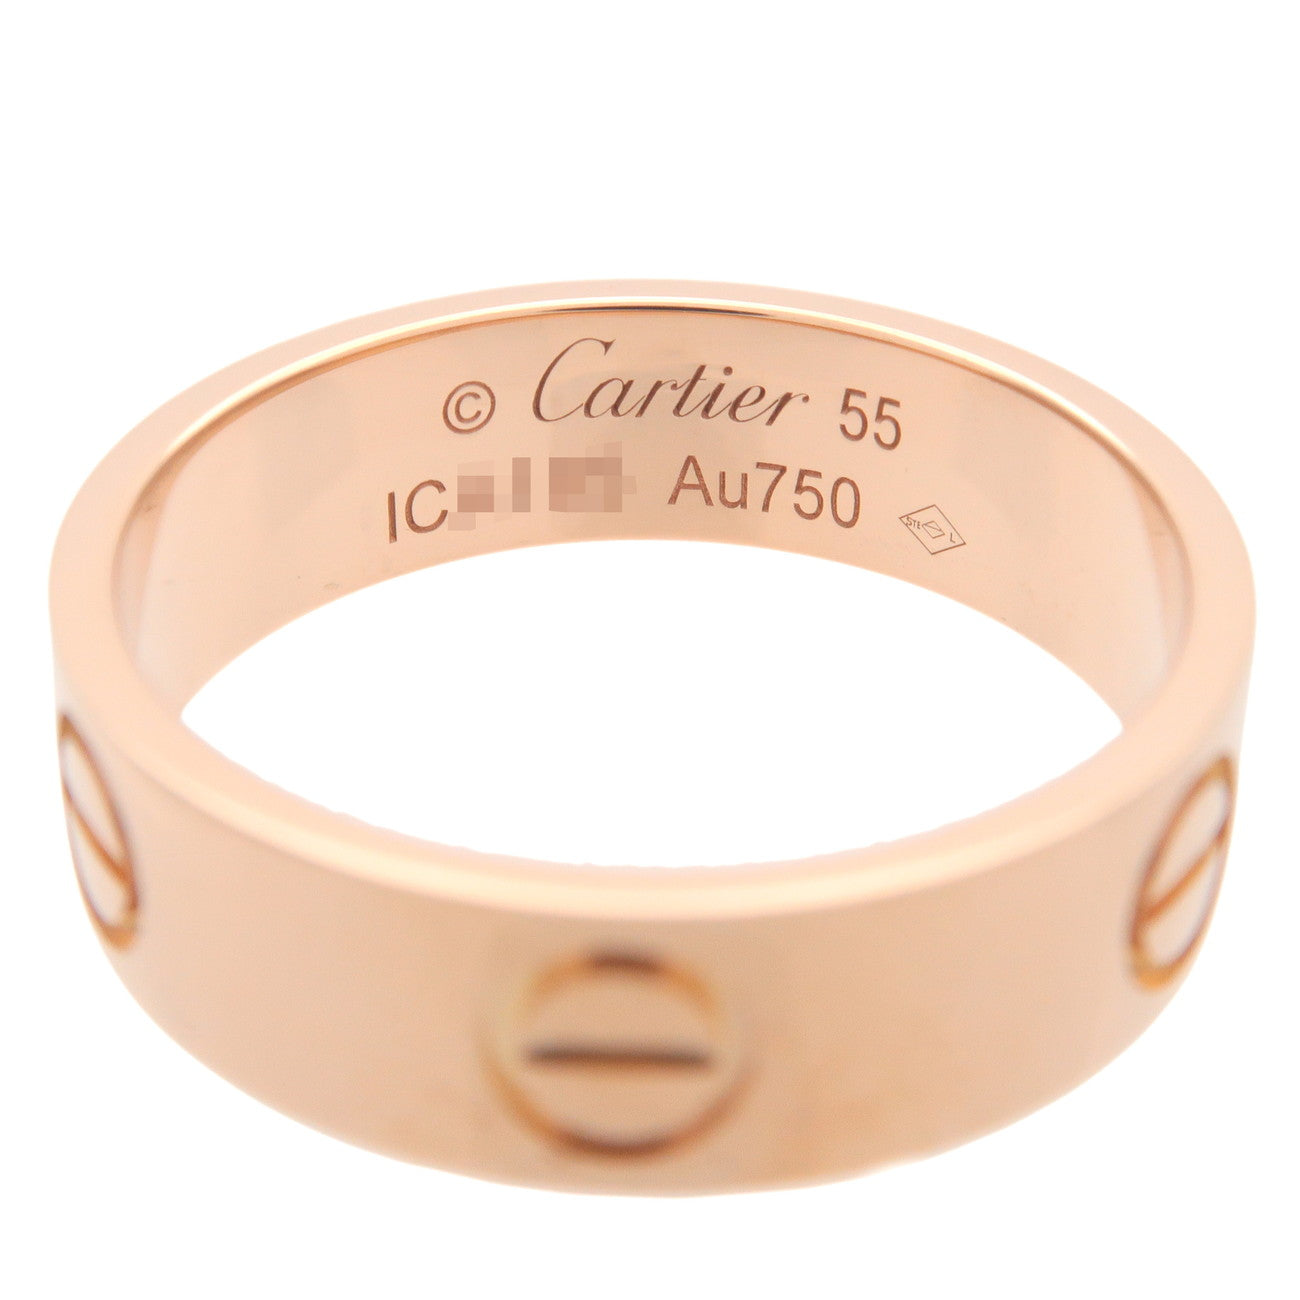 Cartier Love Ring K18PG 750 Rose Gold #55 US7.5 EU55